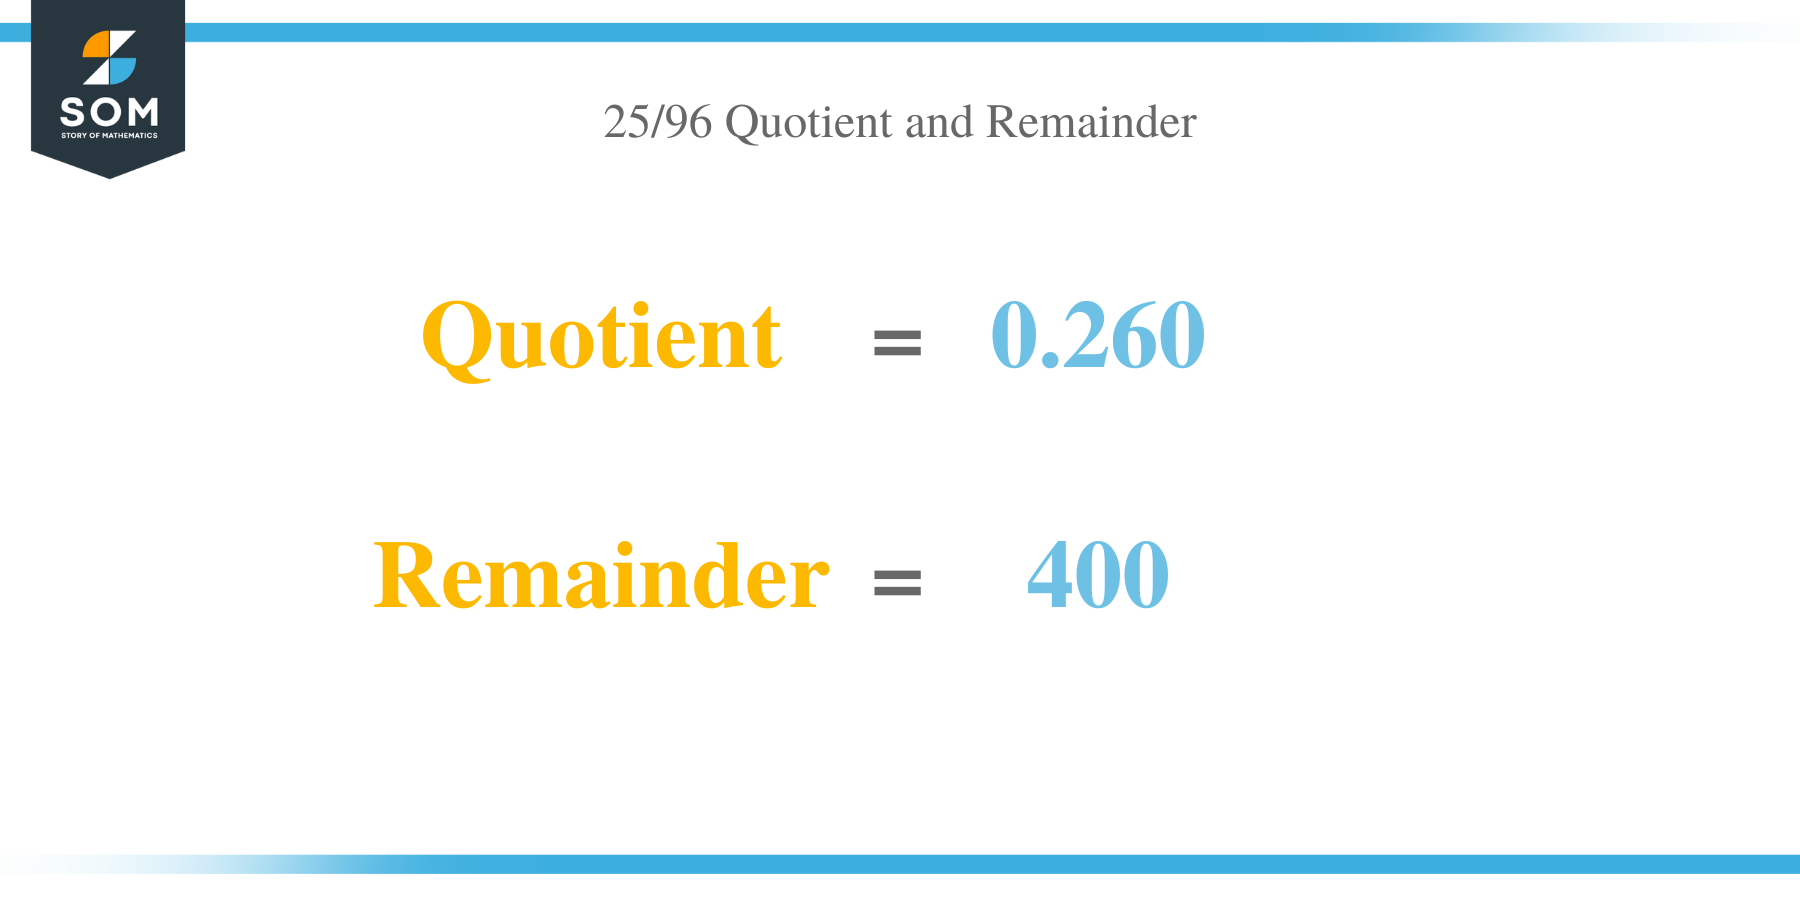 Quotient and Remainder of 25 per 96